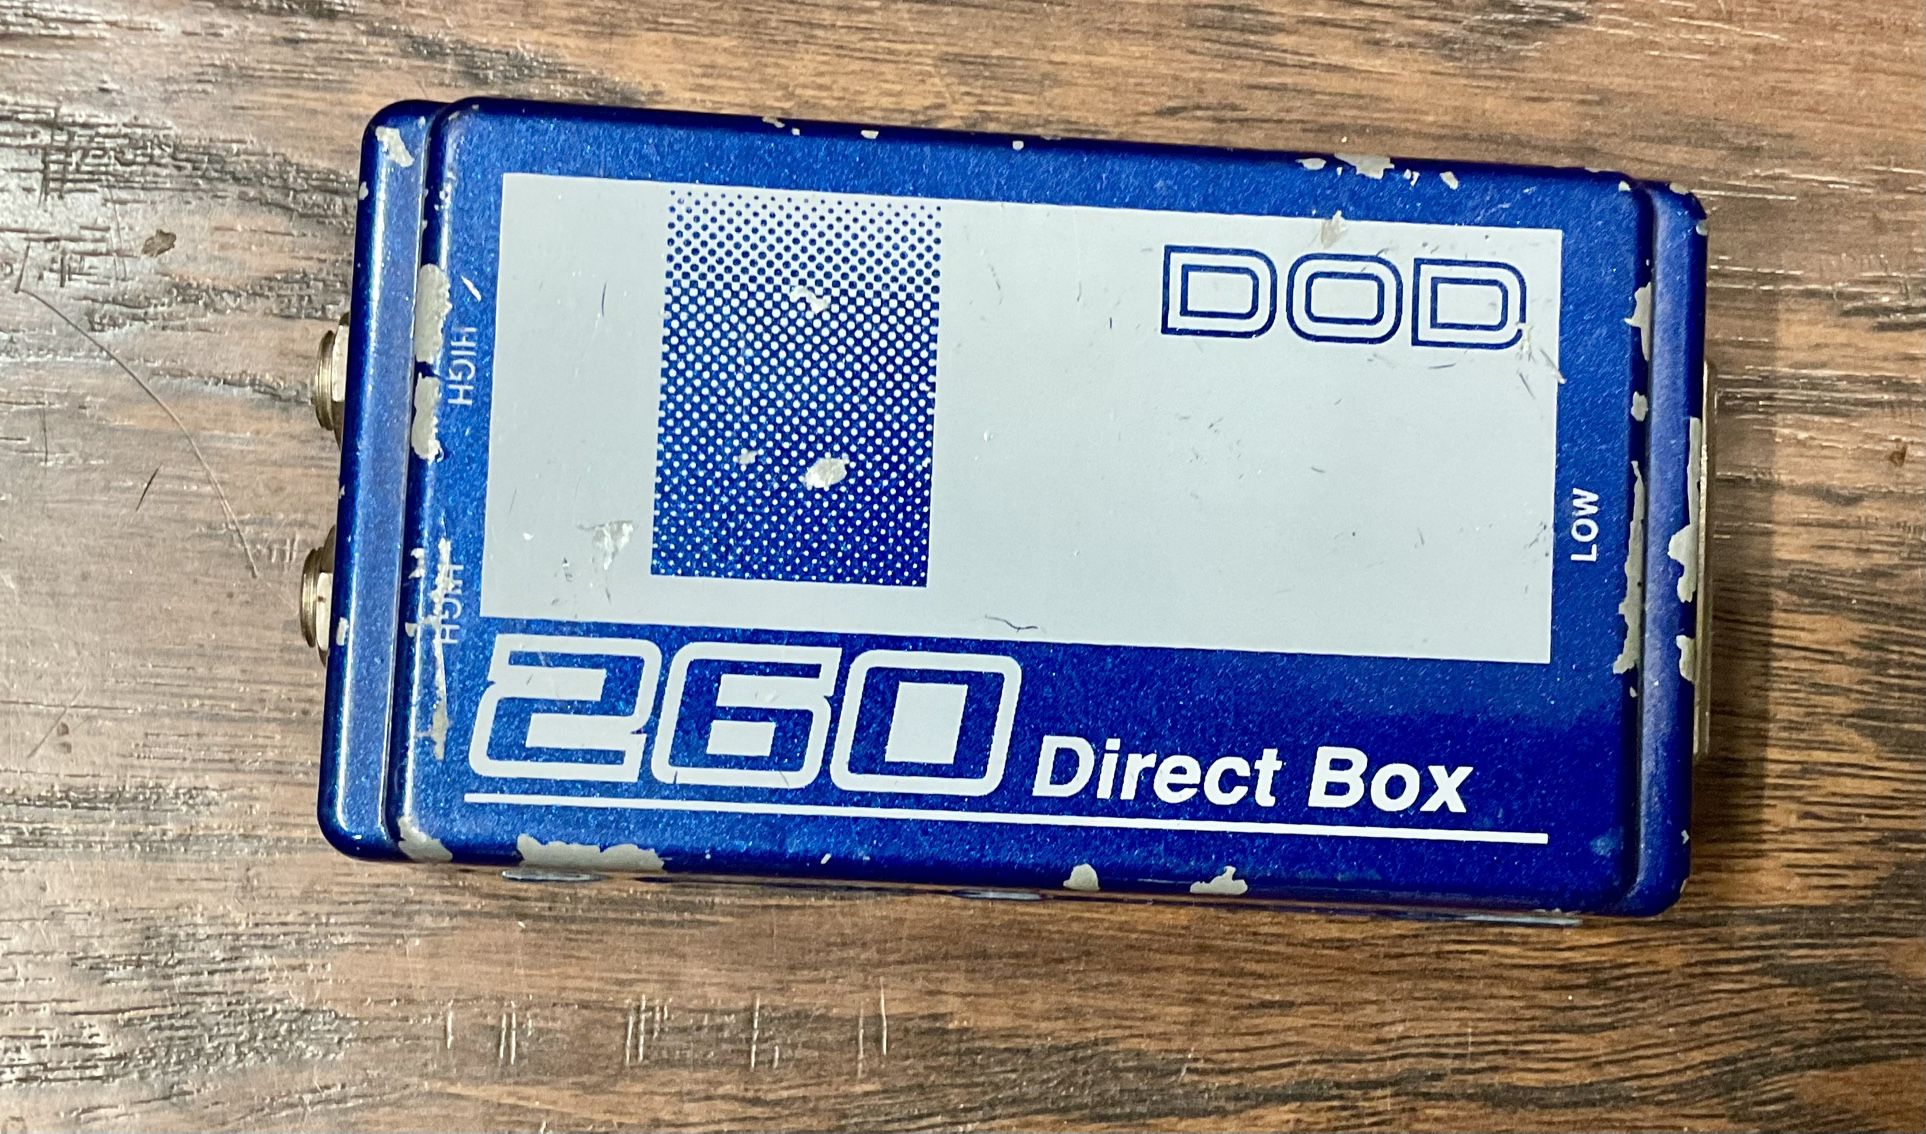 DOD 260 Direct Box - Blue